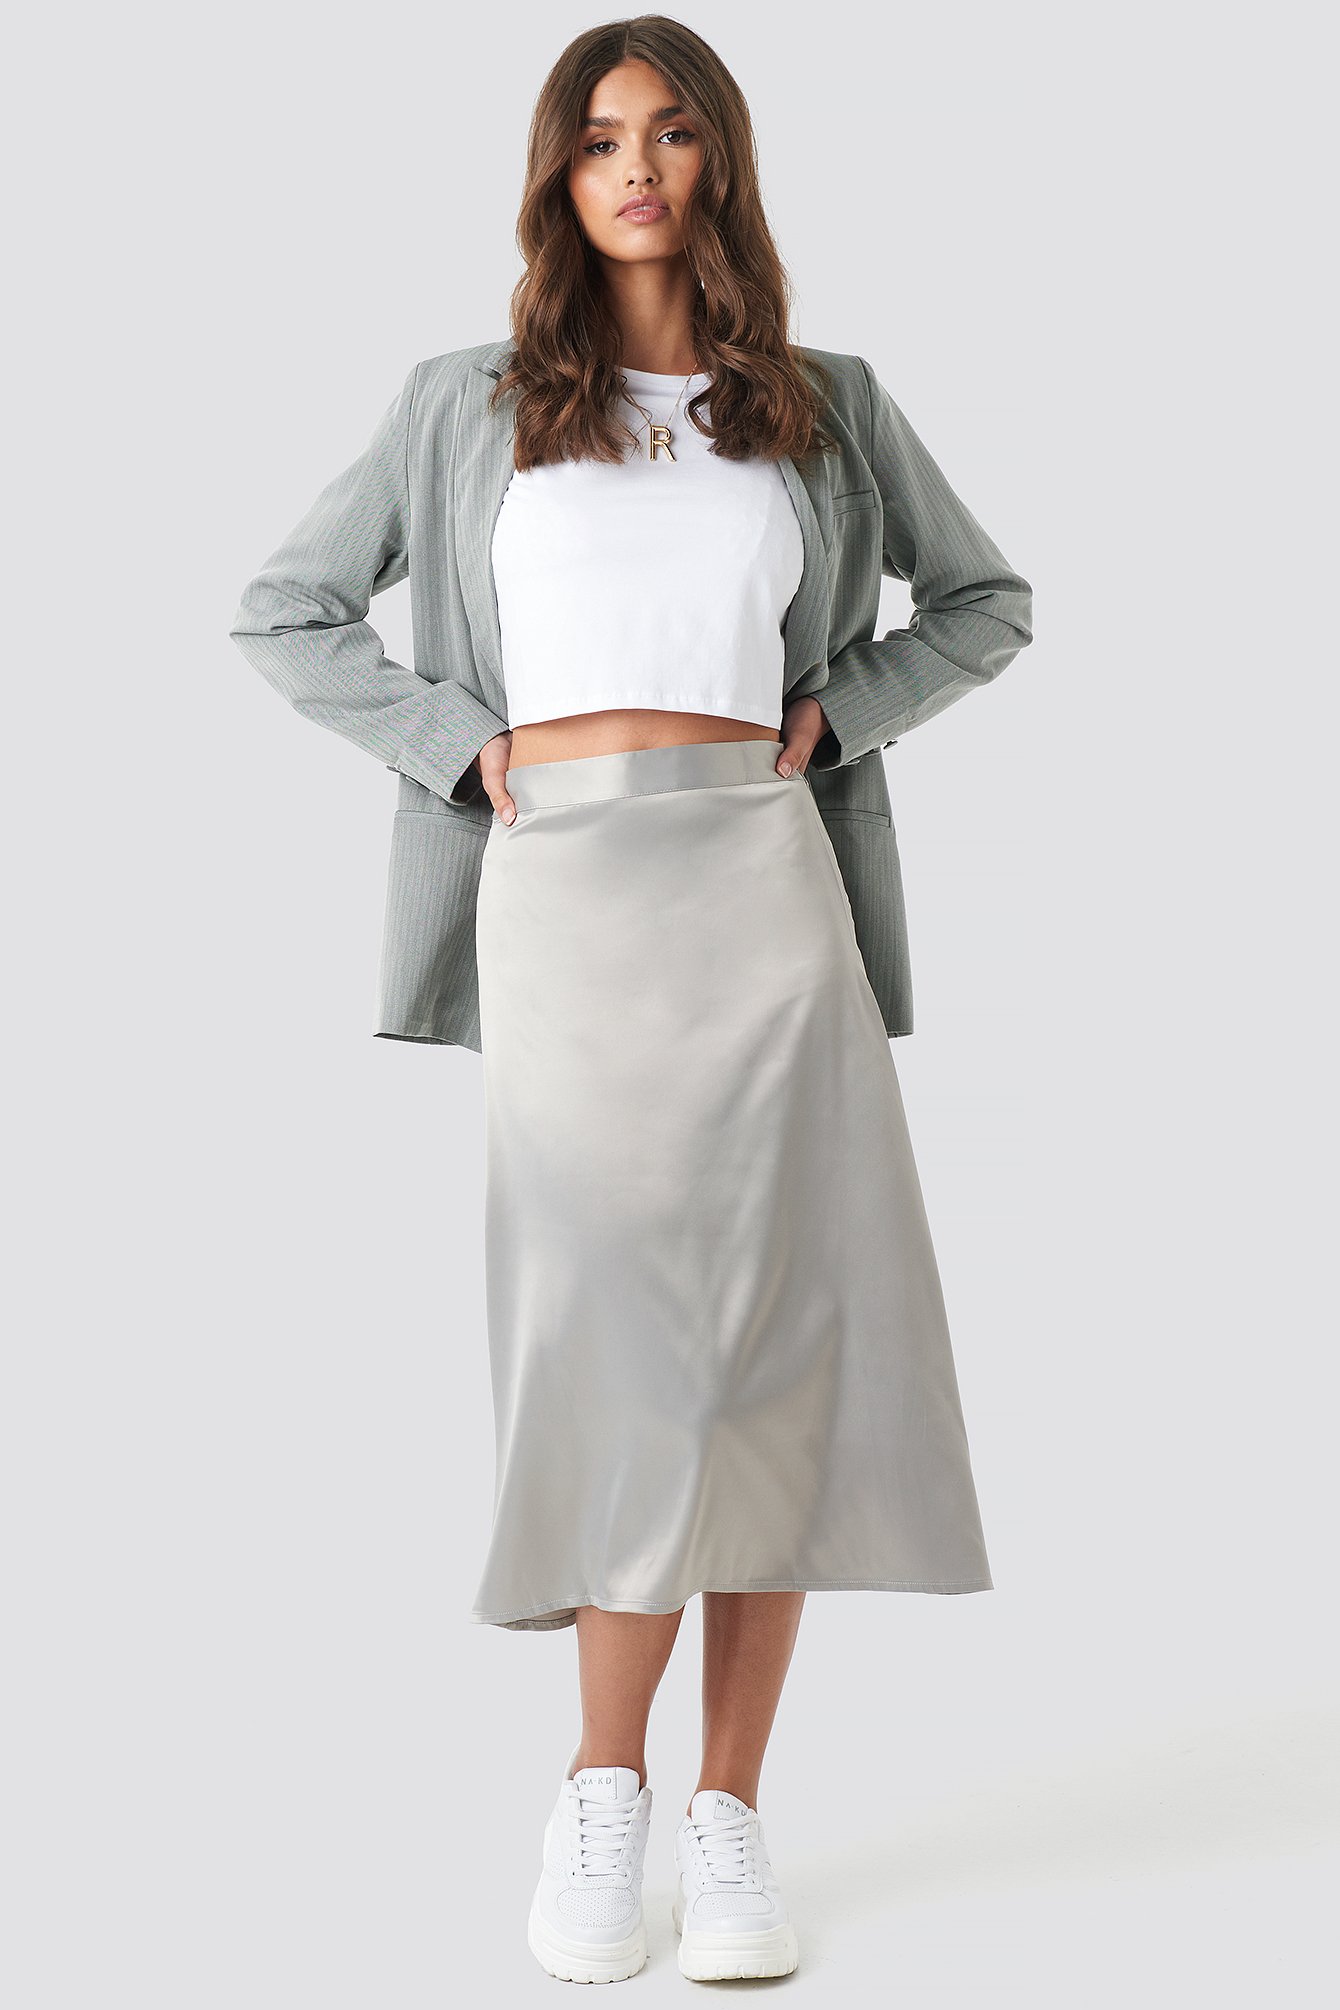 Bias Cut Satin Midi Skirt Outfit.